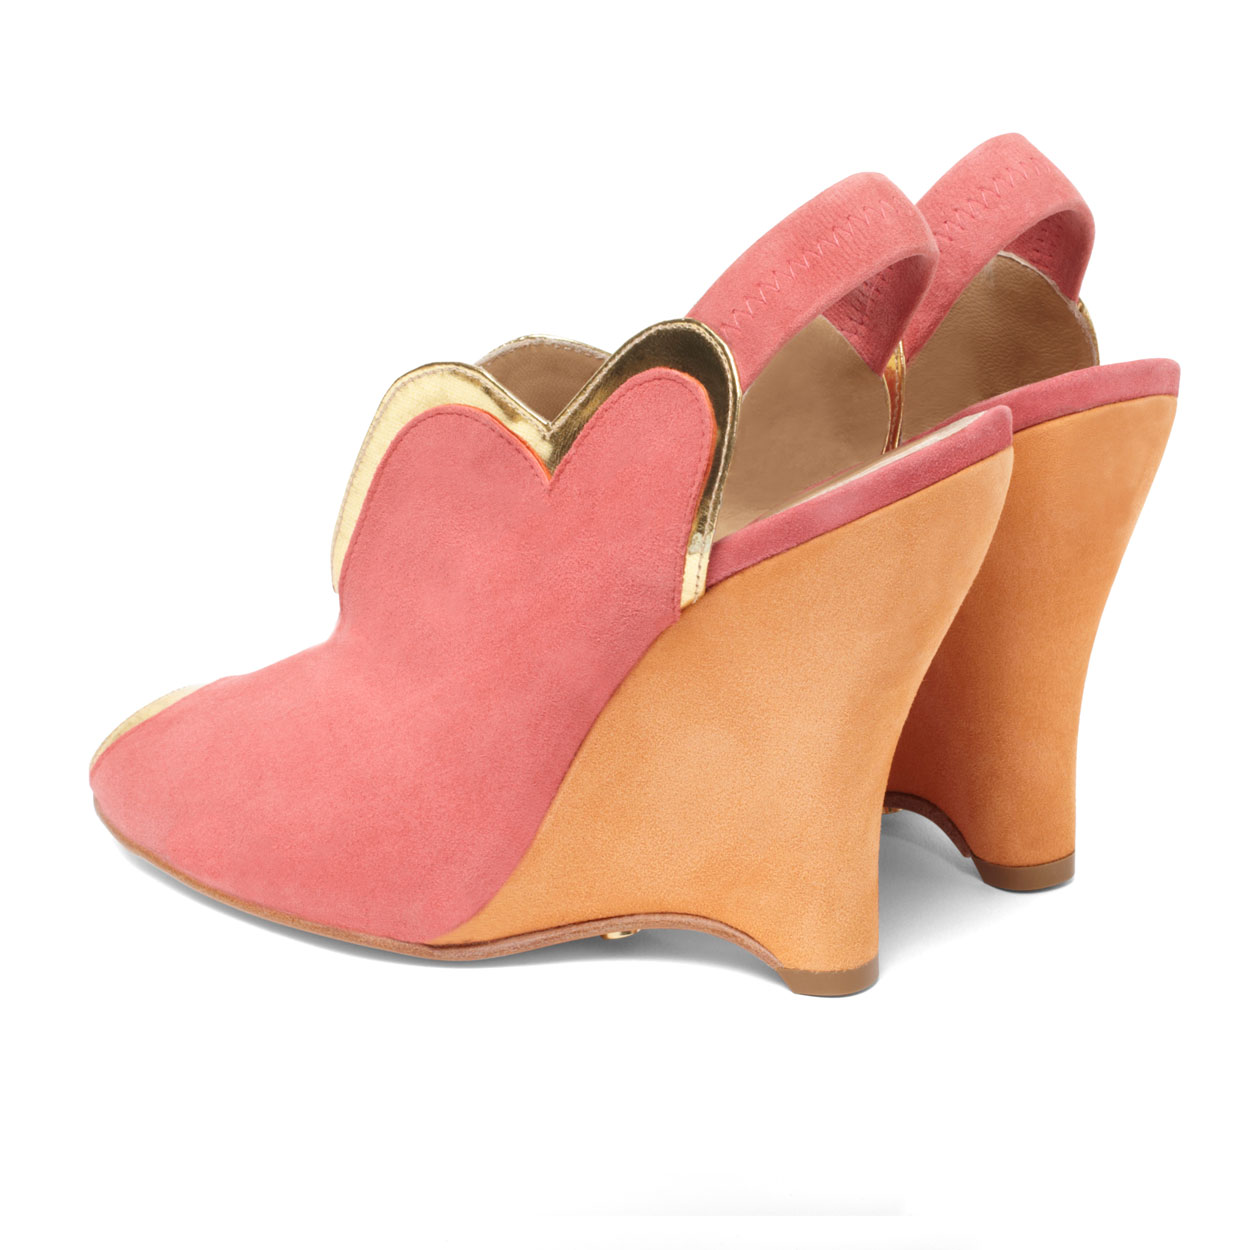 bubble-pink-pair-back-shoes-shoe-designer-london-cleob-heels.jpg